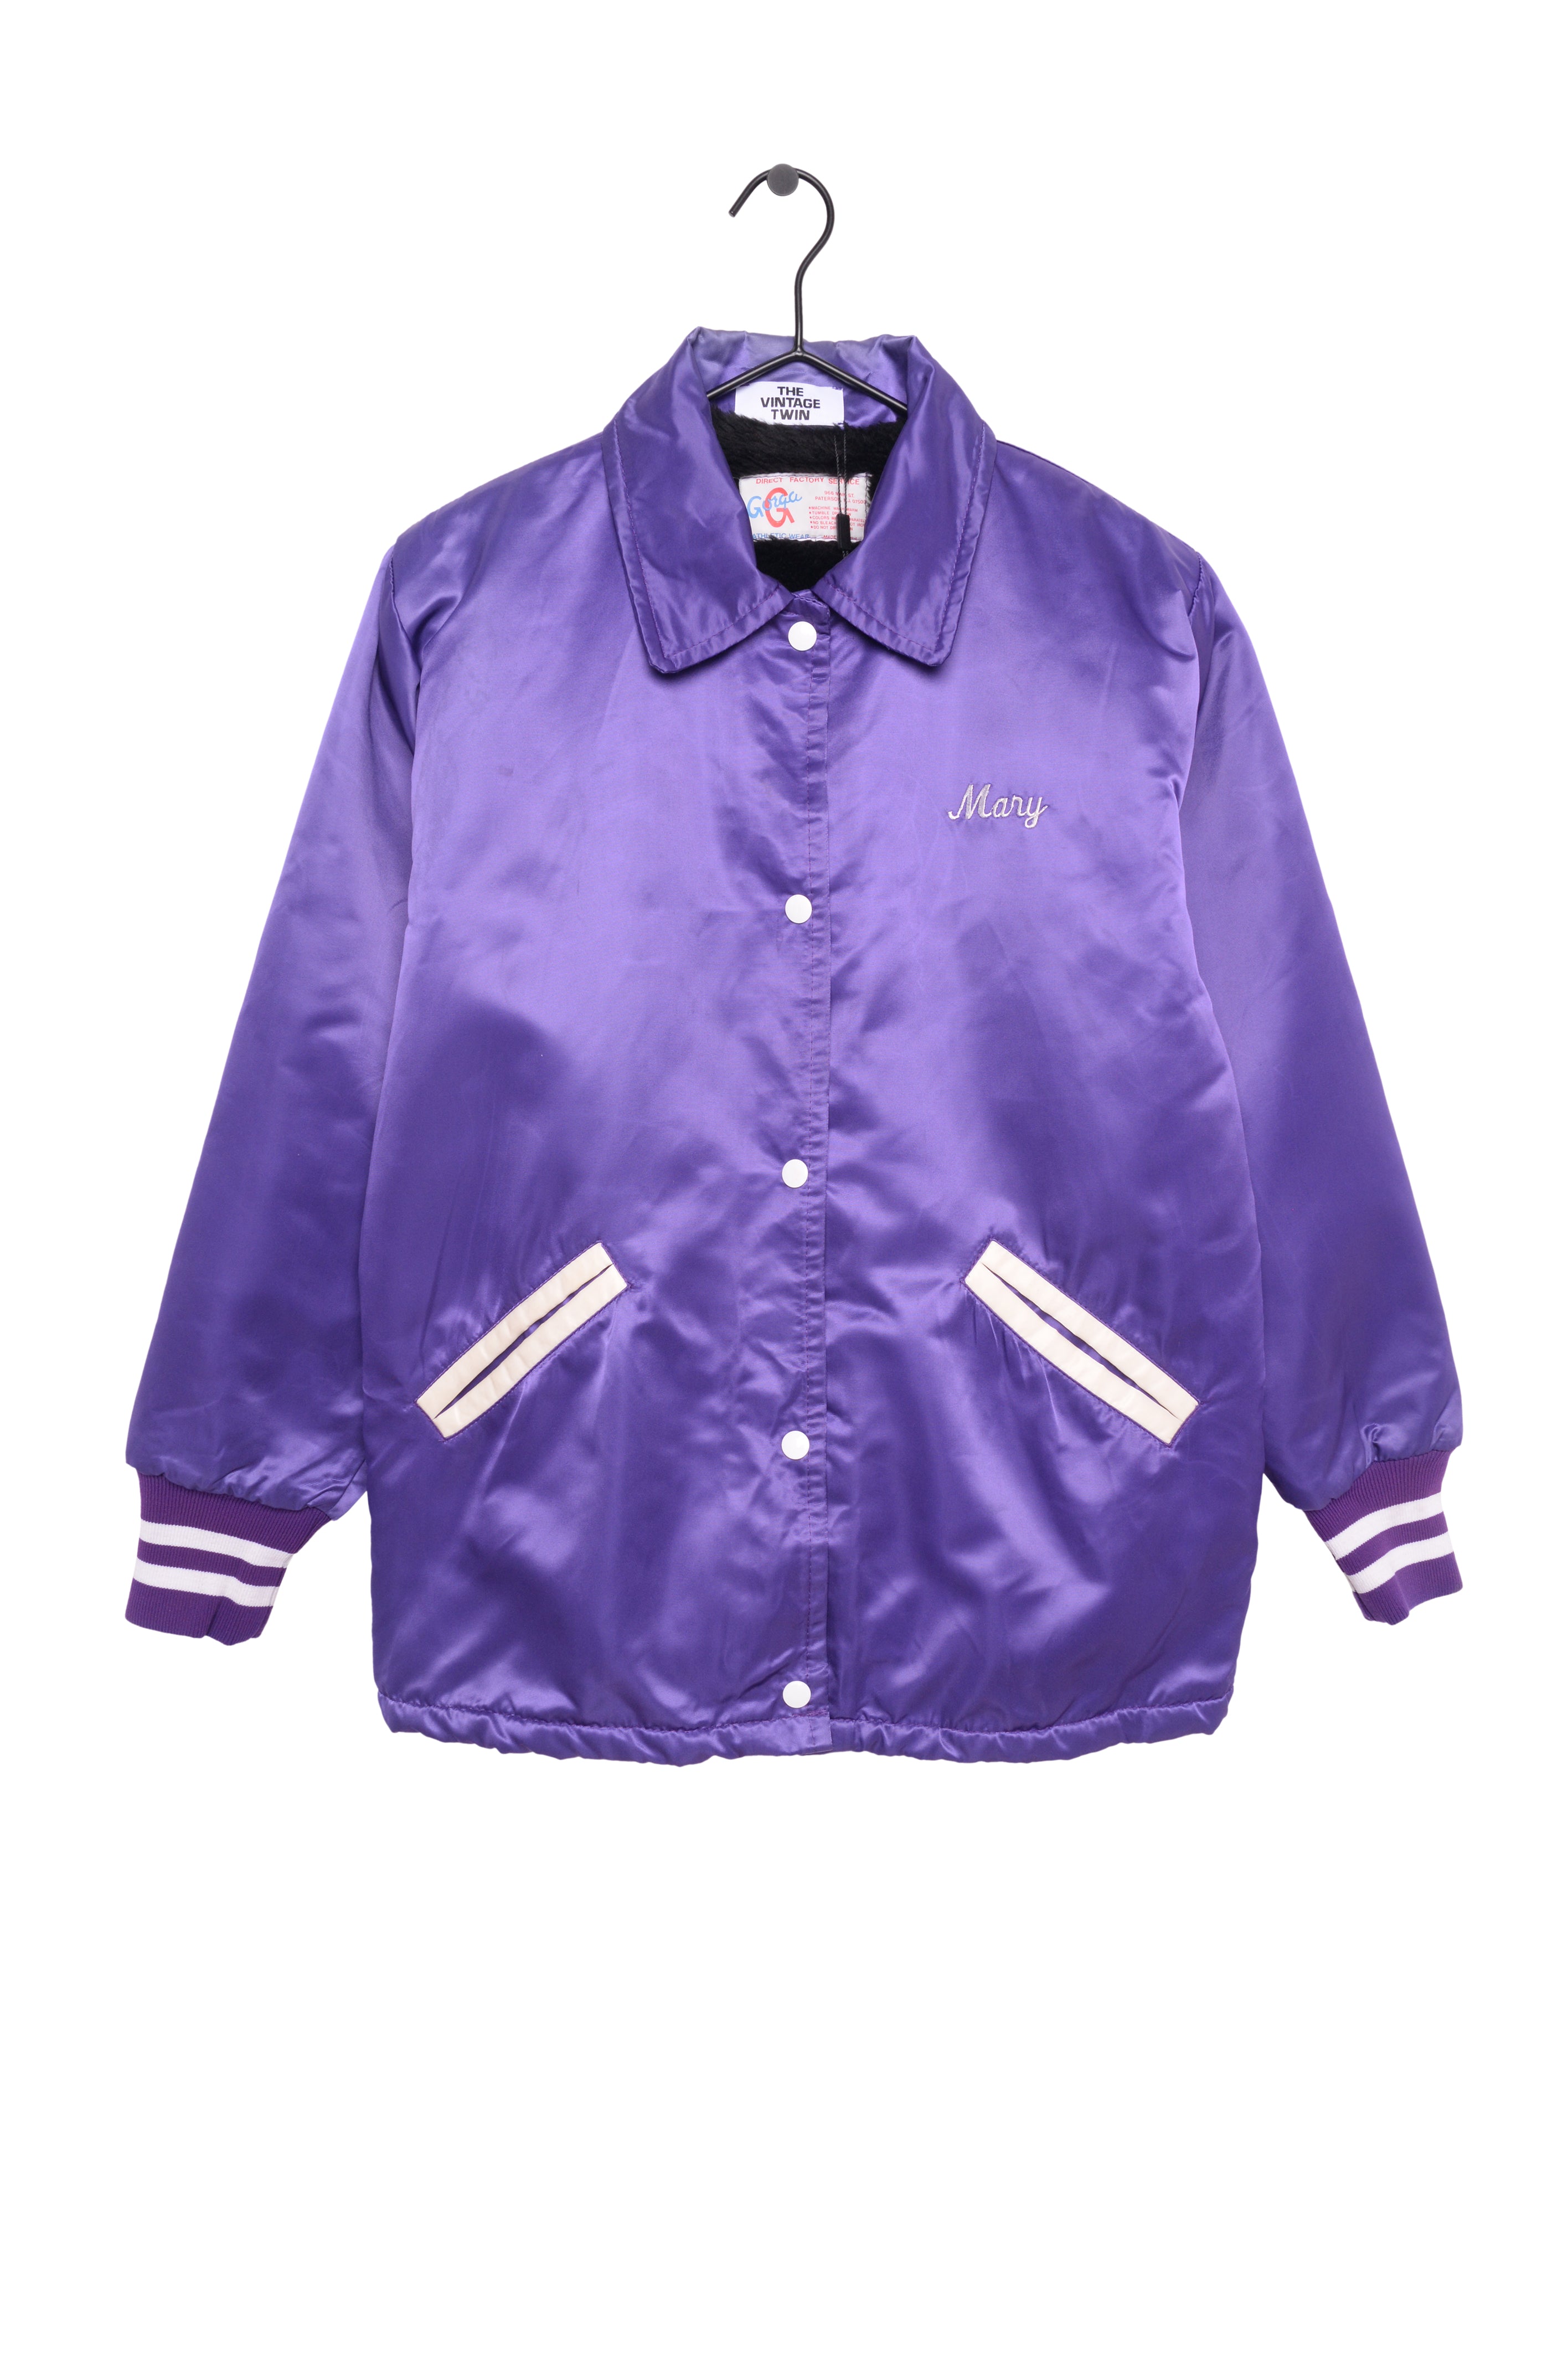 Concepts 96 Varsity Jacket (Purple)